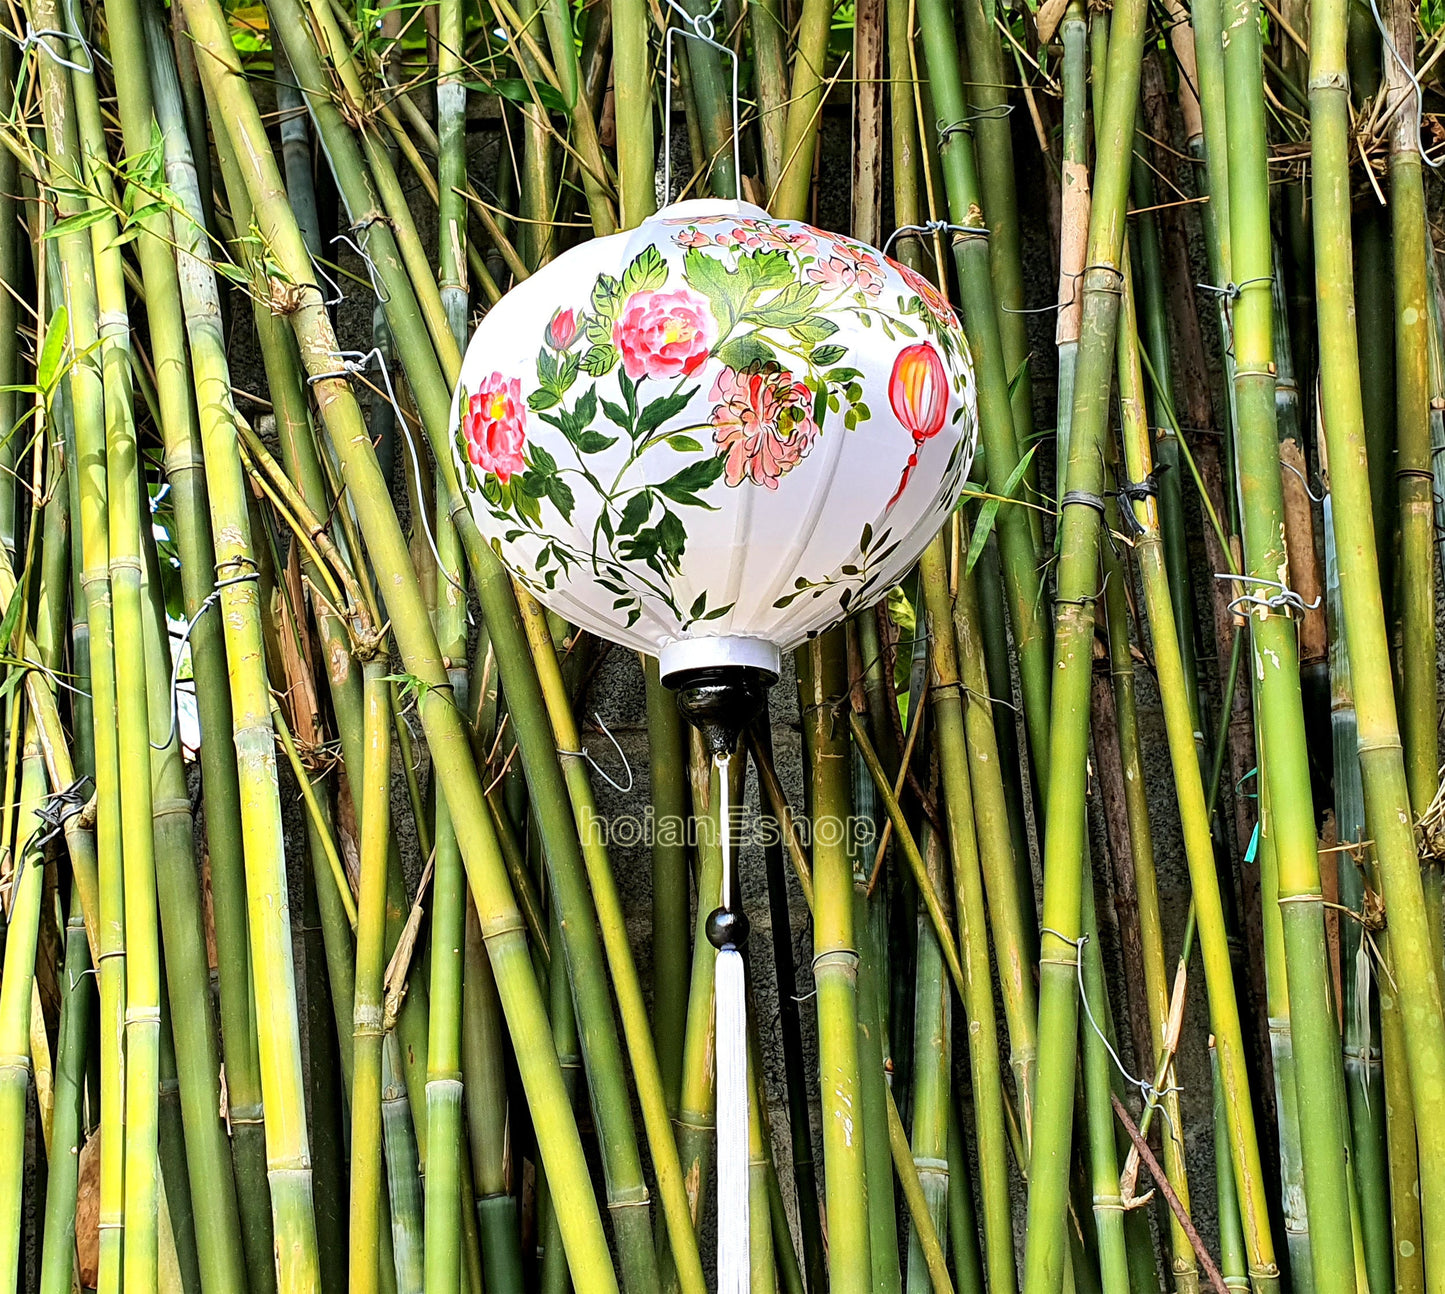 Custom made lanterns - Handpainted lanterns 45cm - Vietnamese Hoi an silk lanterns for wedding party decor - Flower silk lanterns